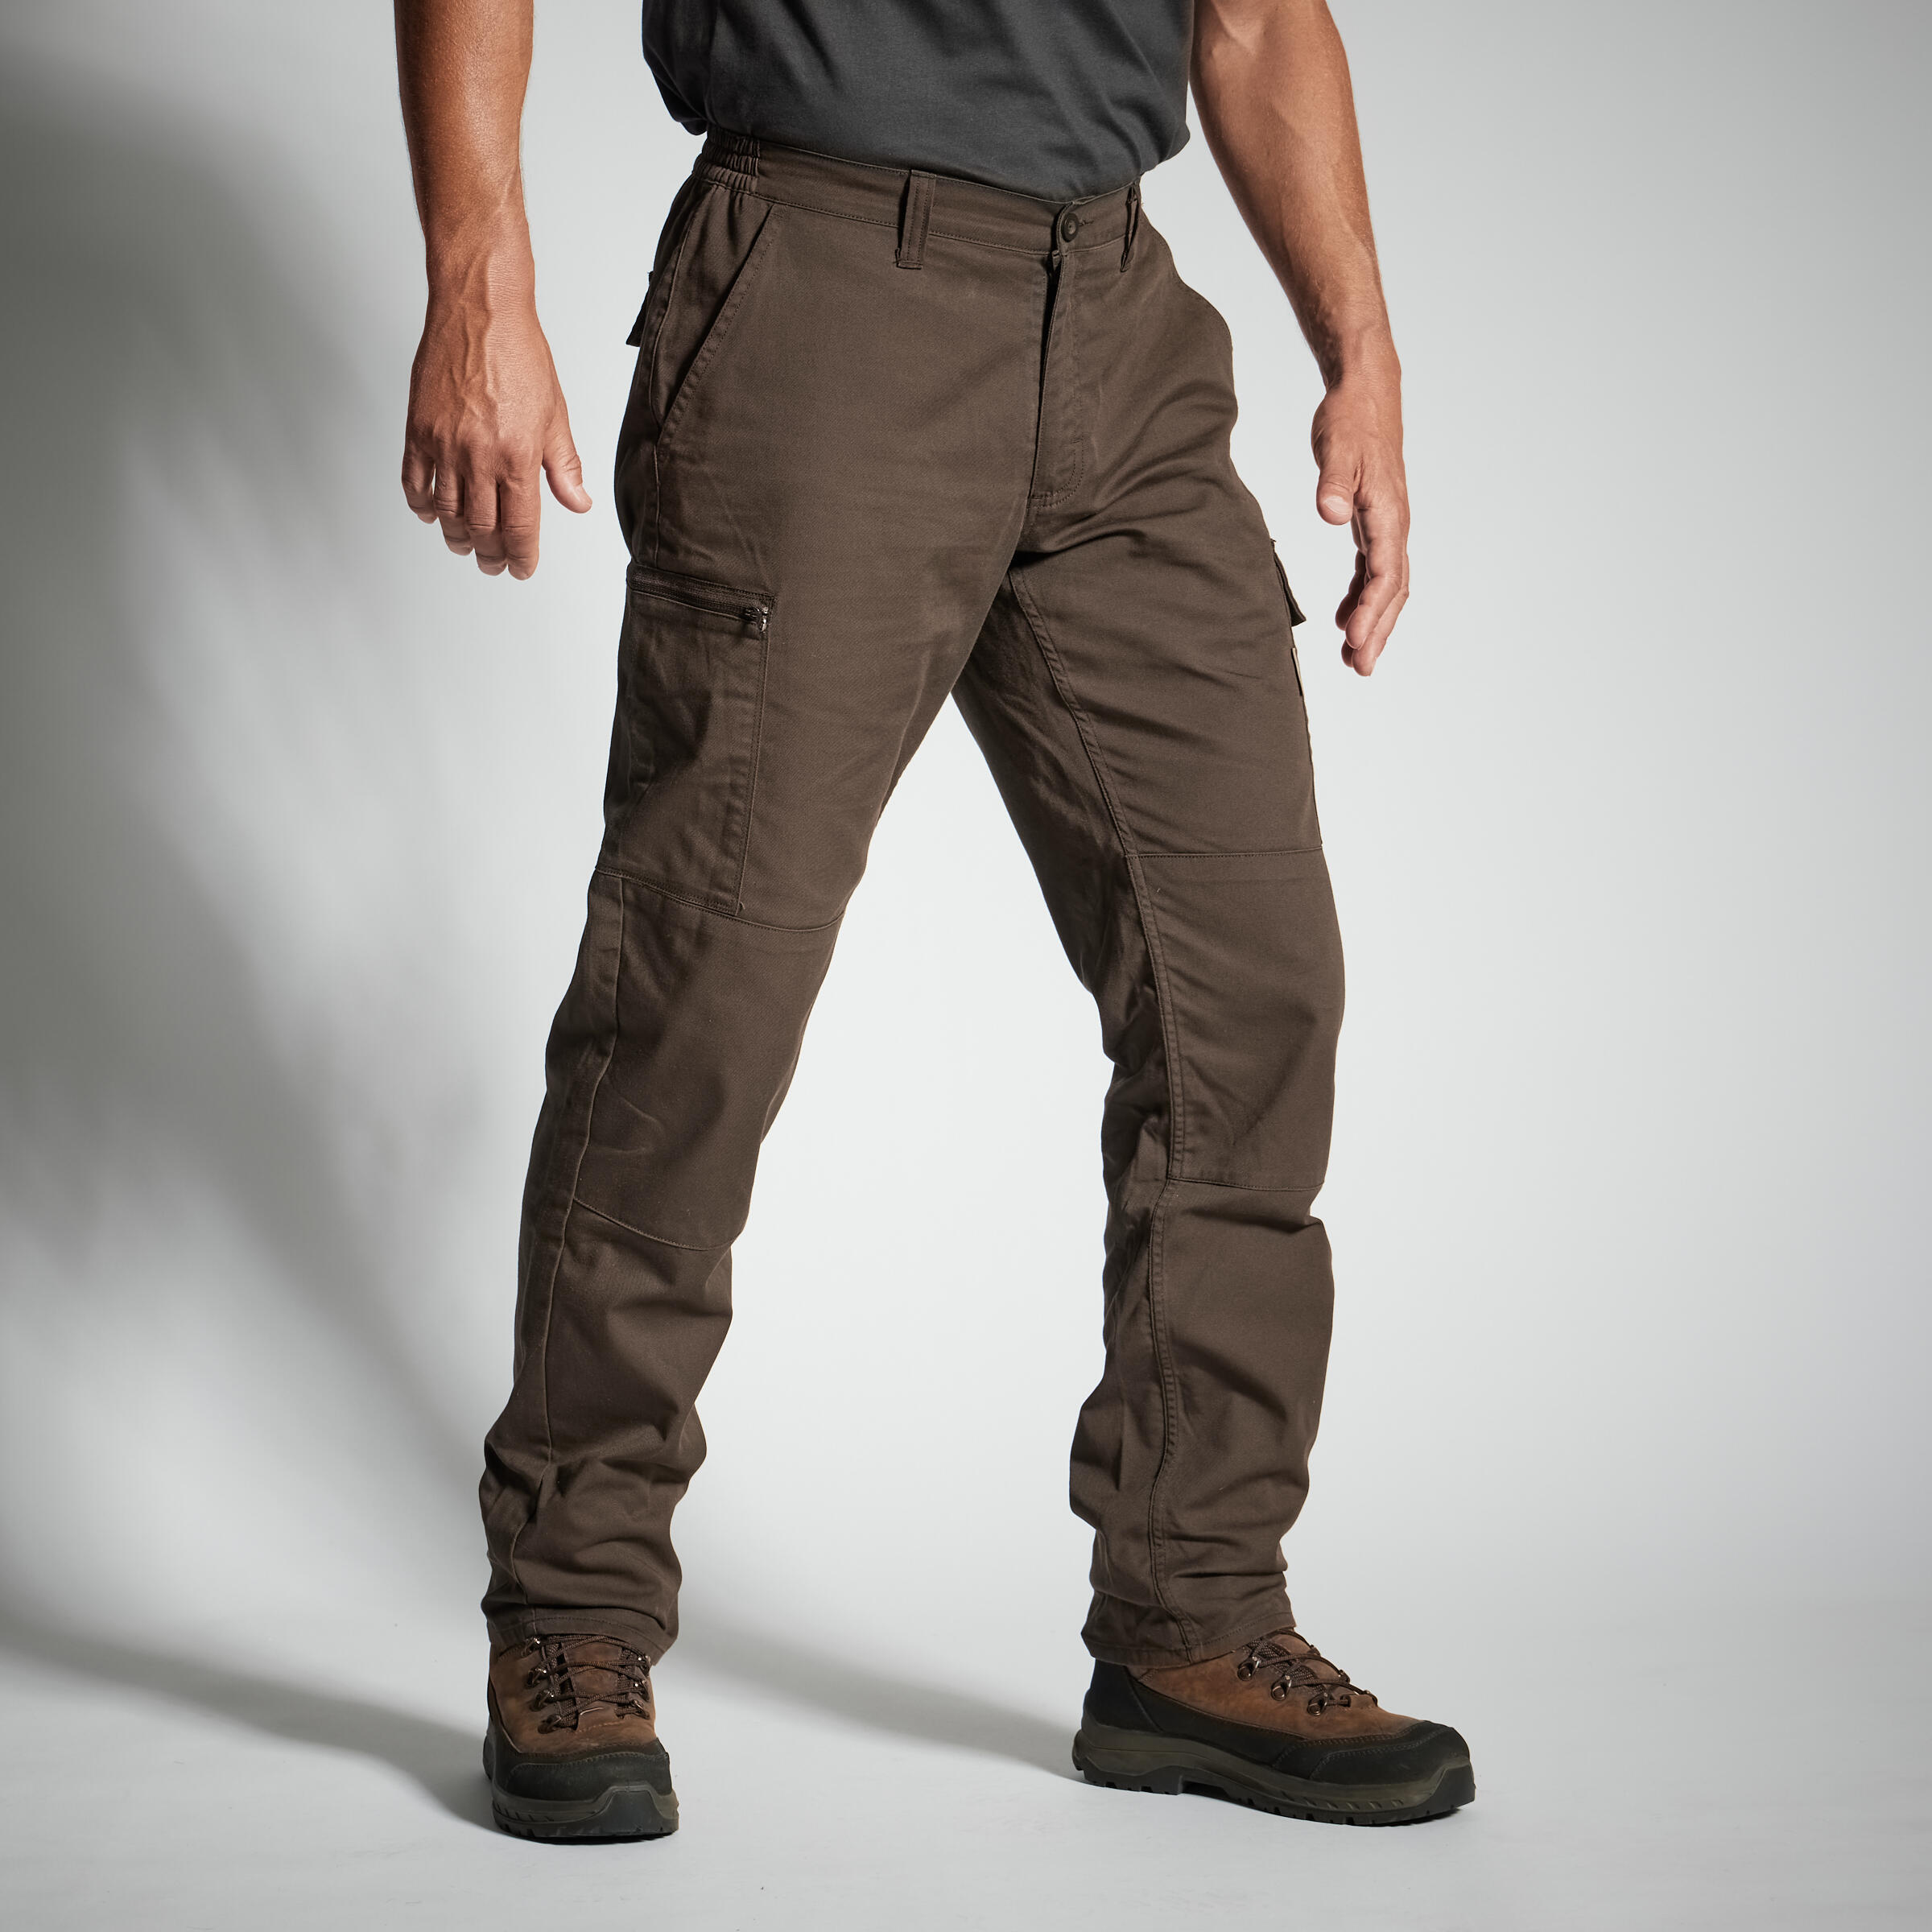 Men Trousers Pants SG-300 - Dual-Tone Grey/Black